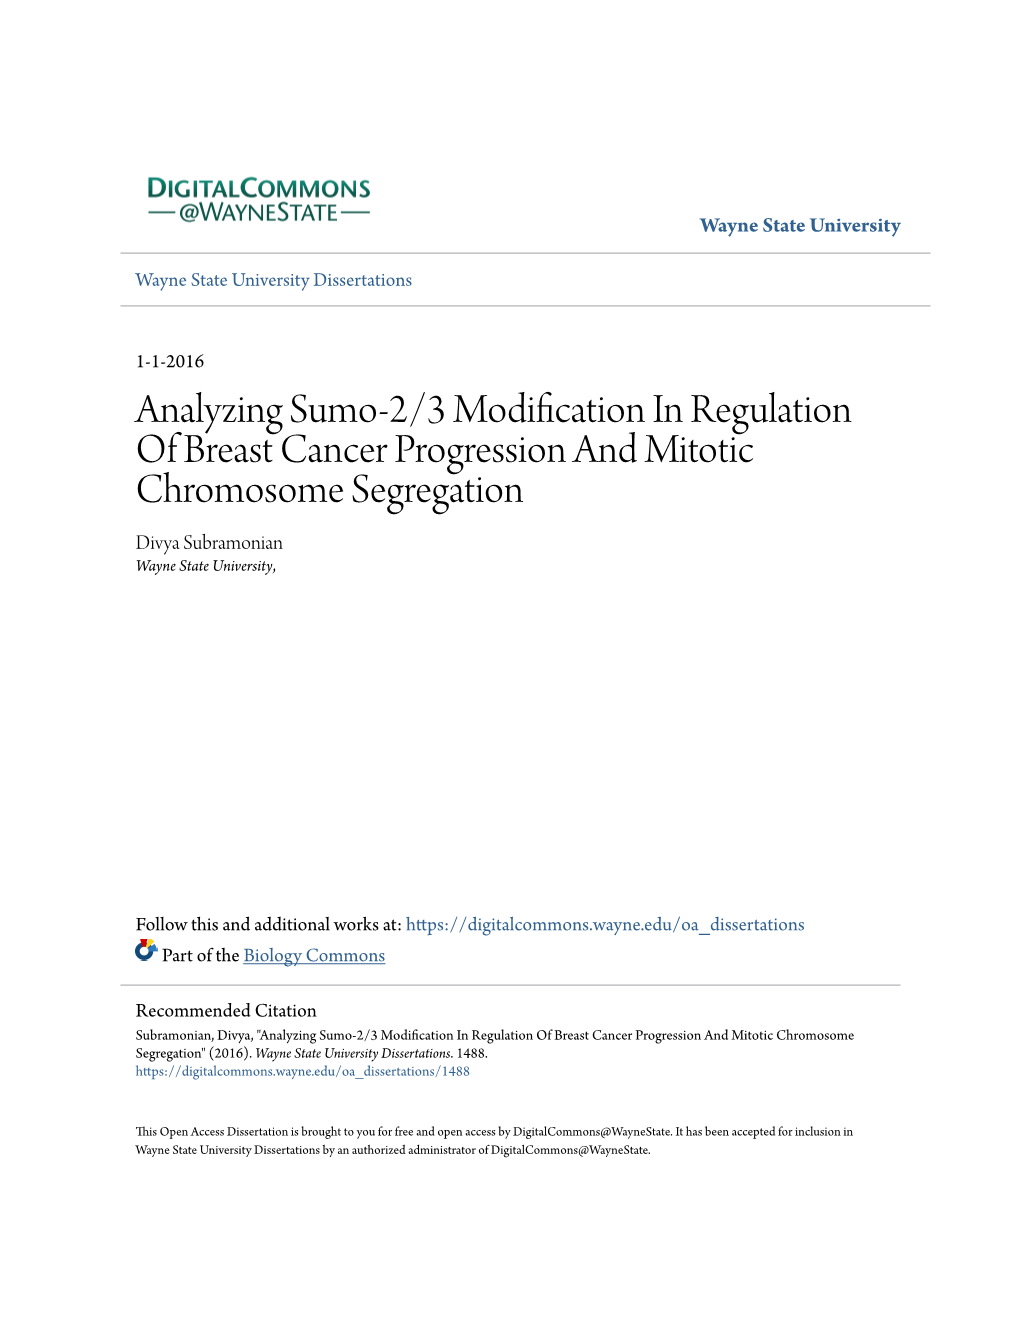 Analyzing Sumo-2/3 Modification in Regulation of Breast Cancer Progression and Mitotic Chromosome Segregation Divya Subramonian Wayne State University